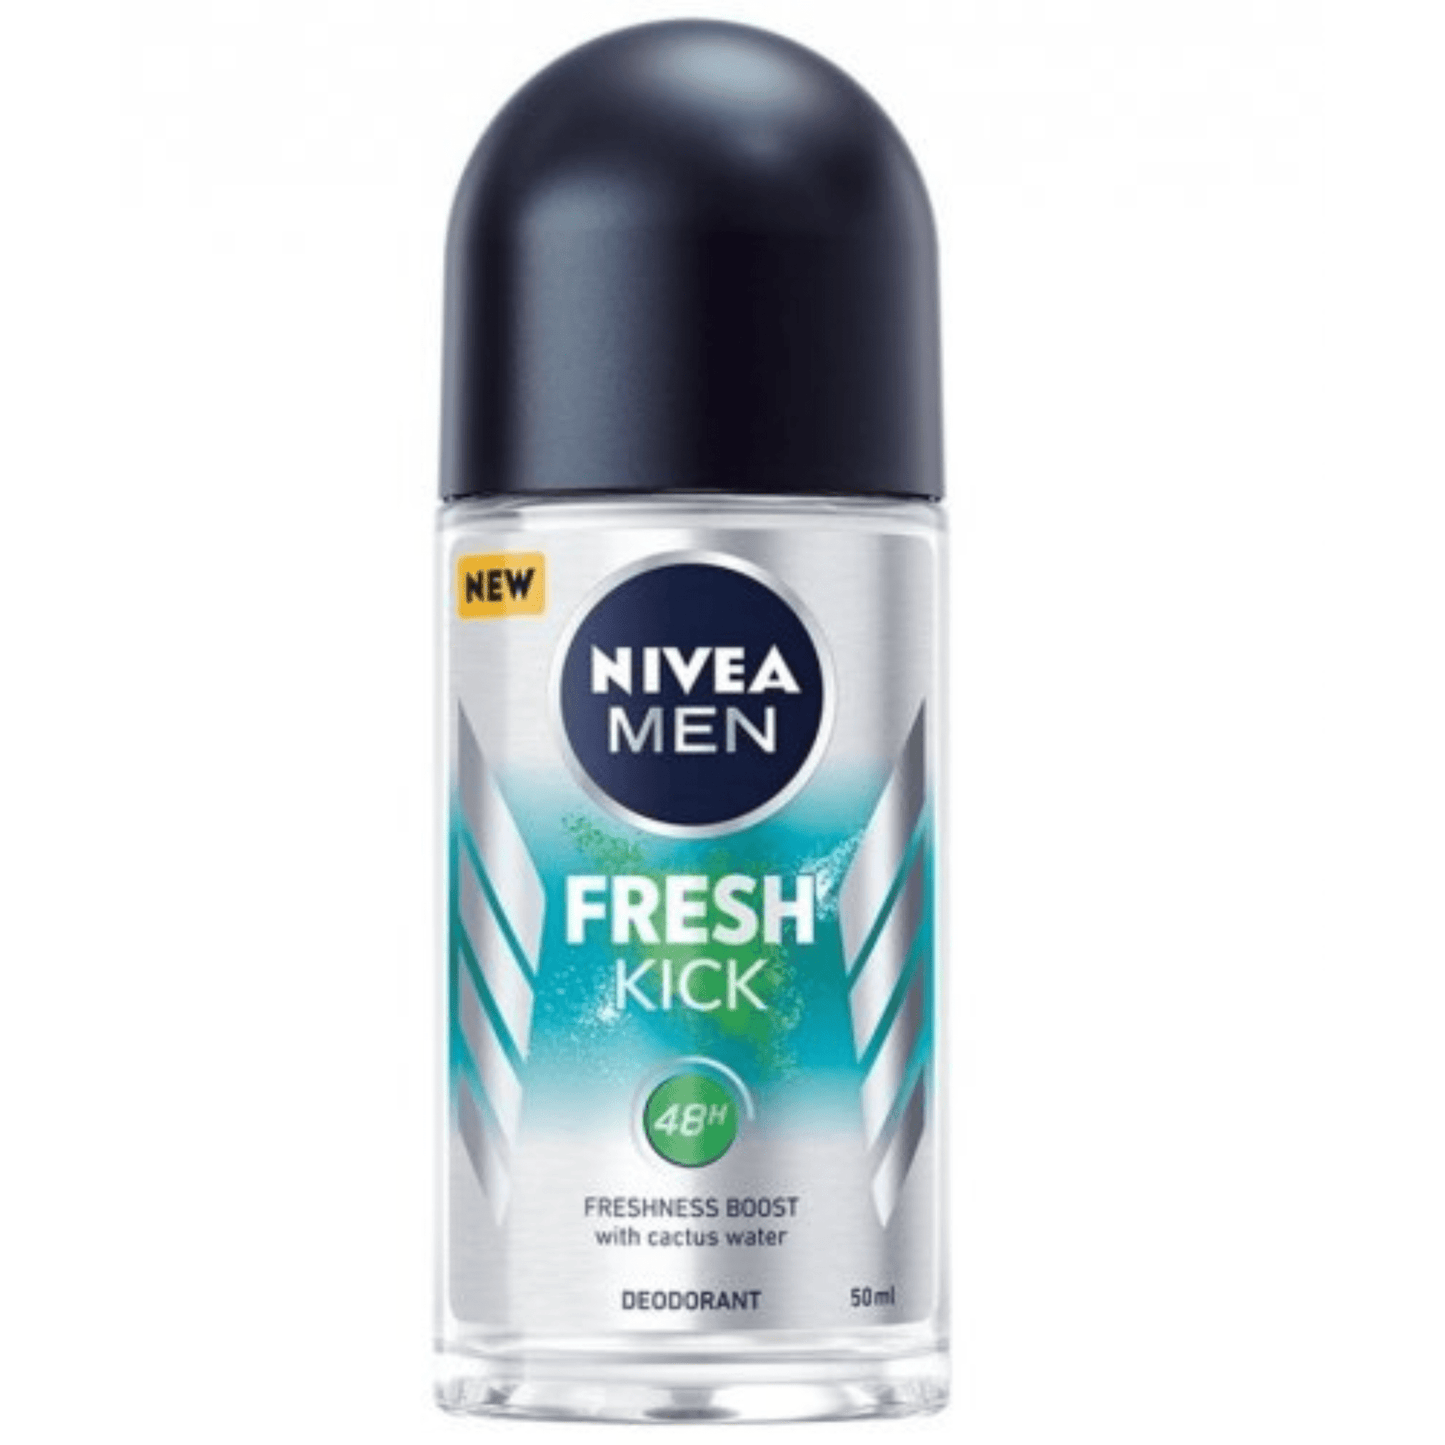 Primary Image of Roll-On Fresh Kick Anti-Perspirant Deodorant